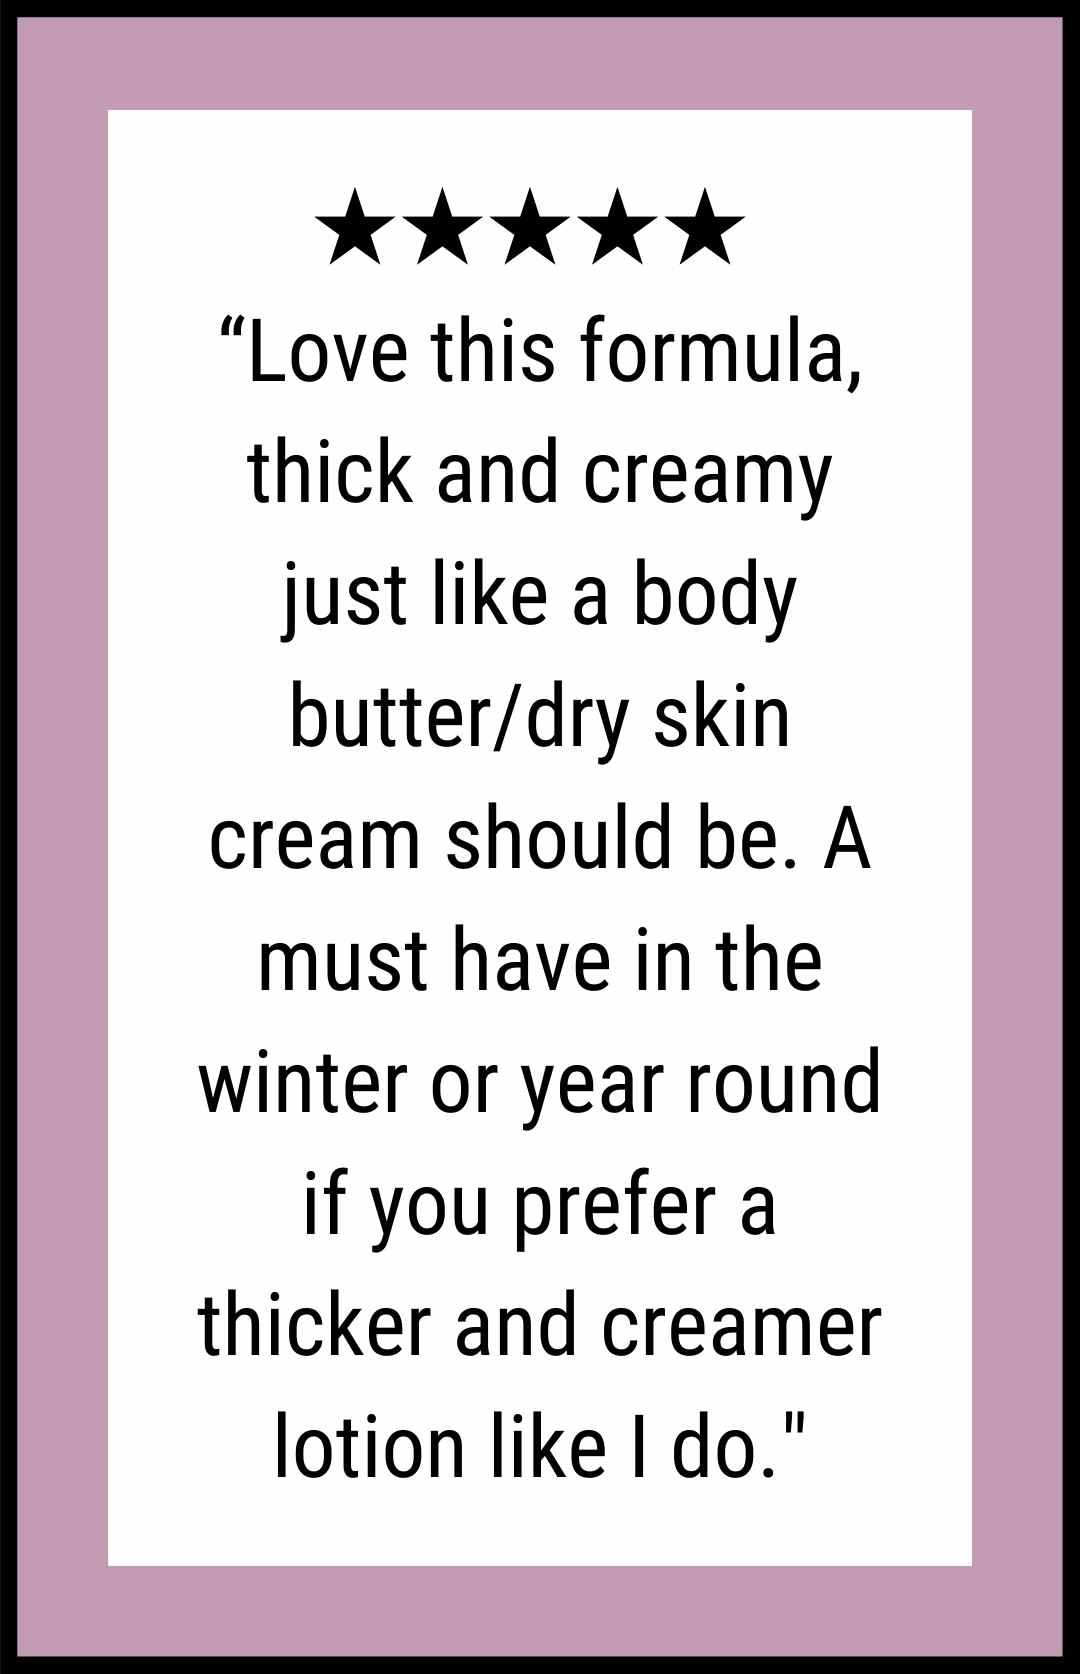 Moody Sisters Dry Skin Cream Reviews